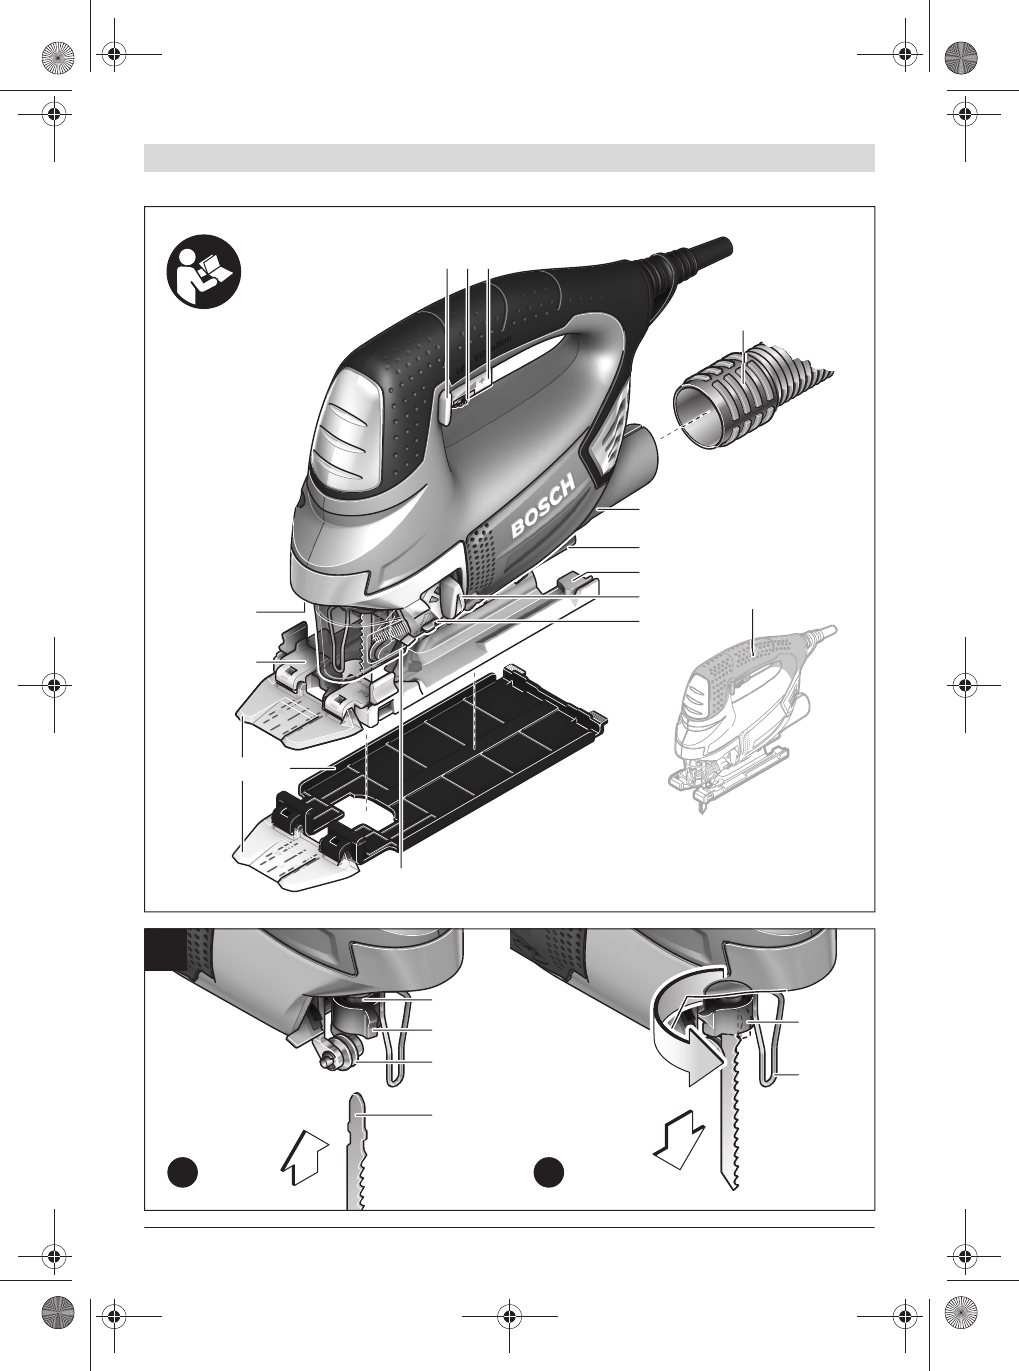 dubbellaag academisch bestrating Handleiding Bosch PST 900 PEL (pagina 3 van 15) (Nederlands)